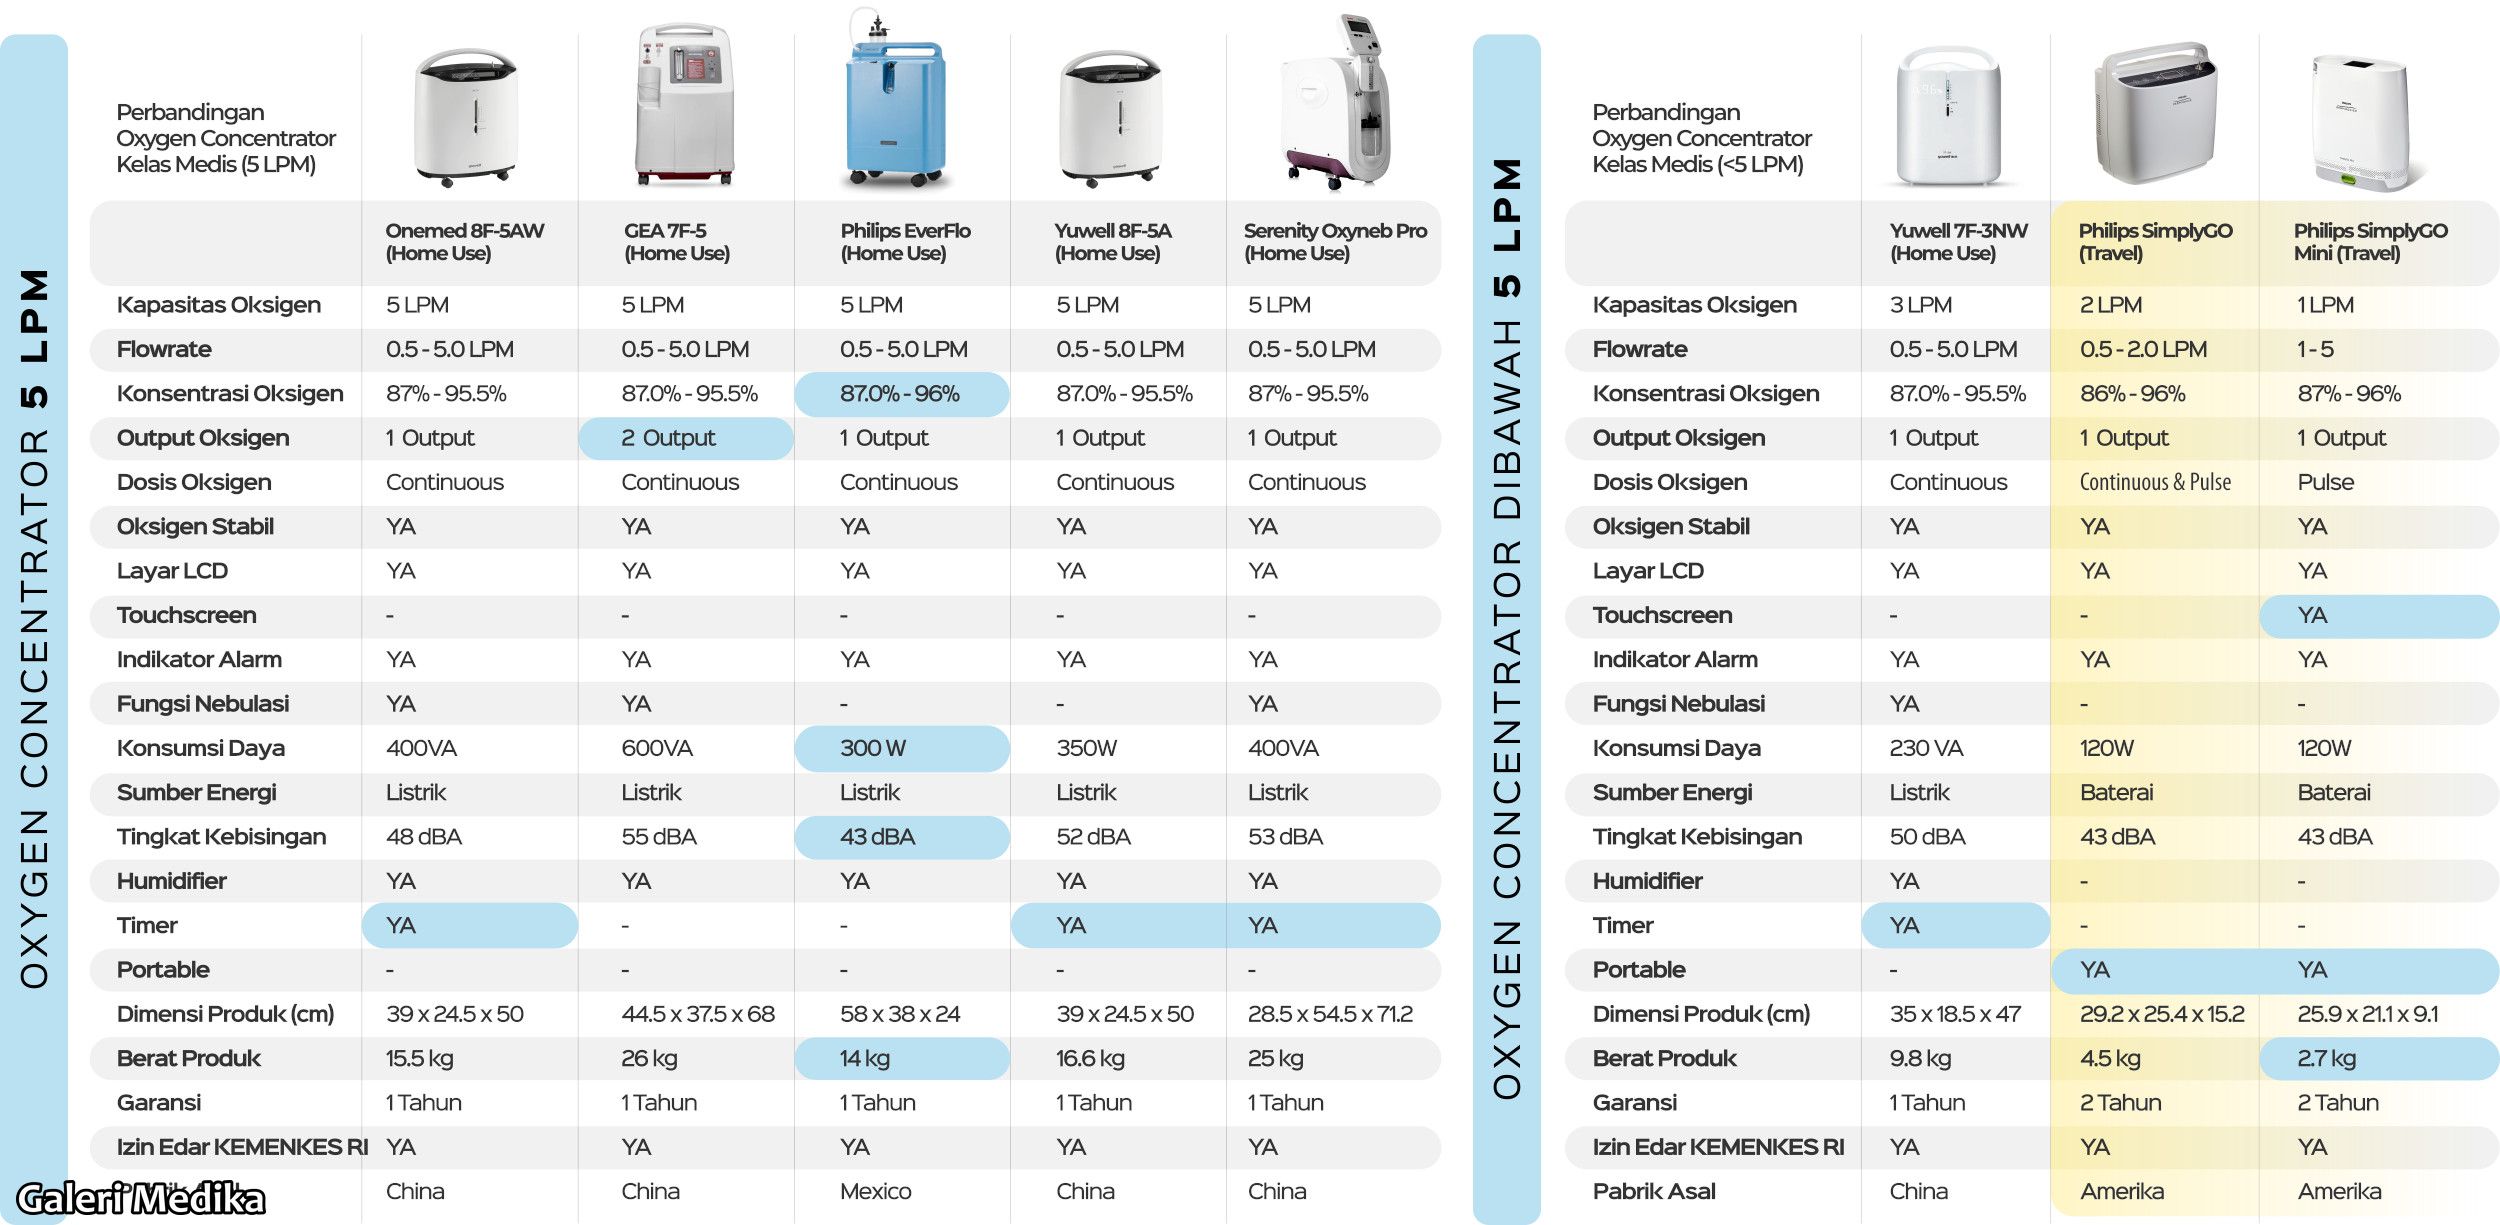 Perbandingan Oxygen Concentrator / Oxygen Concentrator comparison